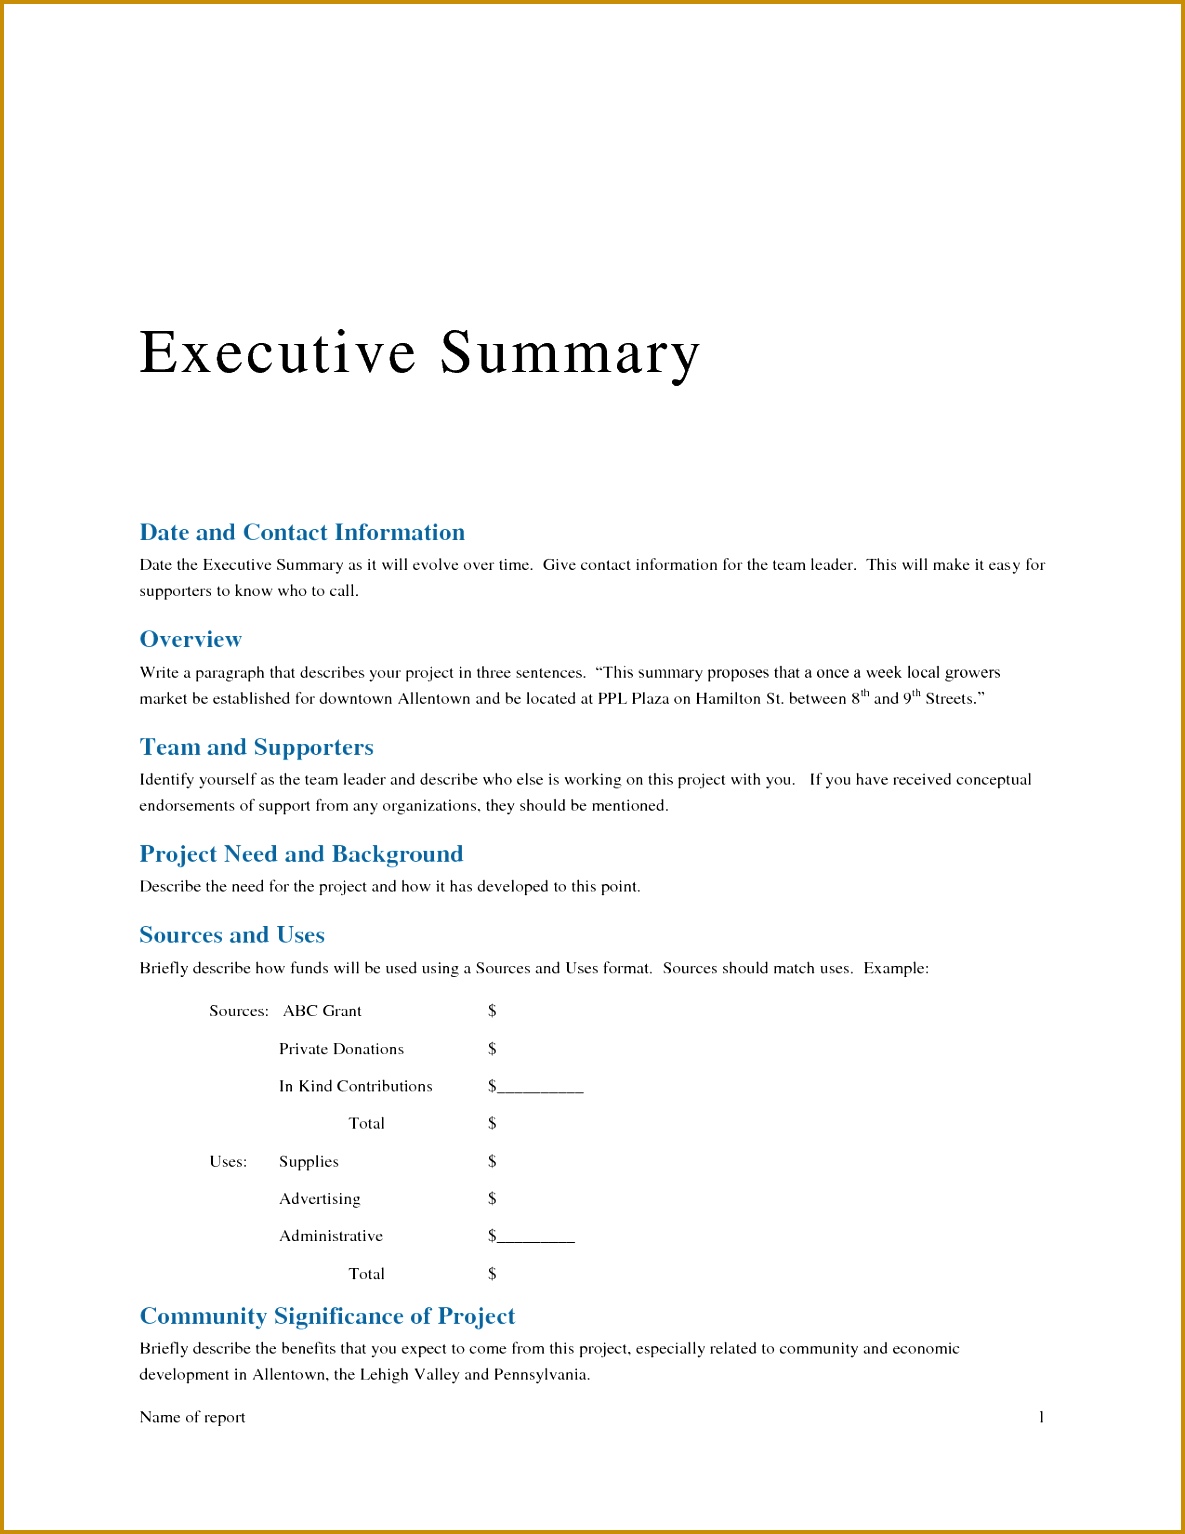 e Page Executive Summary Template Services Receipt Template Executive Summary Template Example e Page Executive 11851534